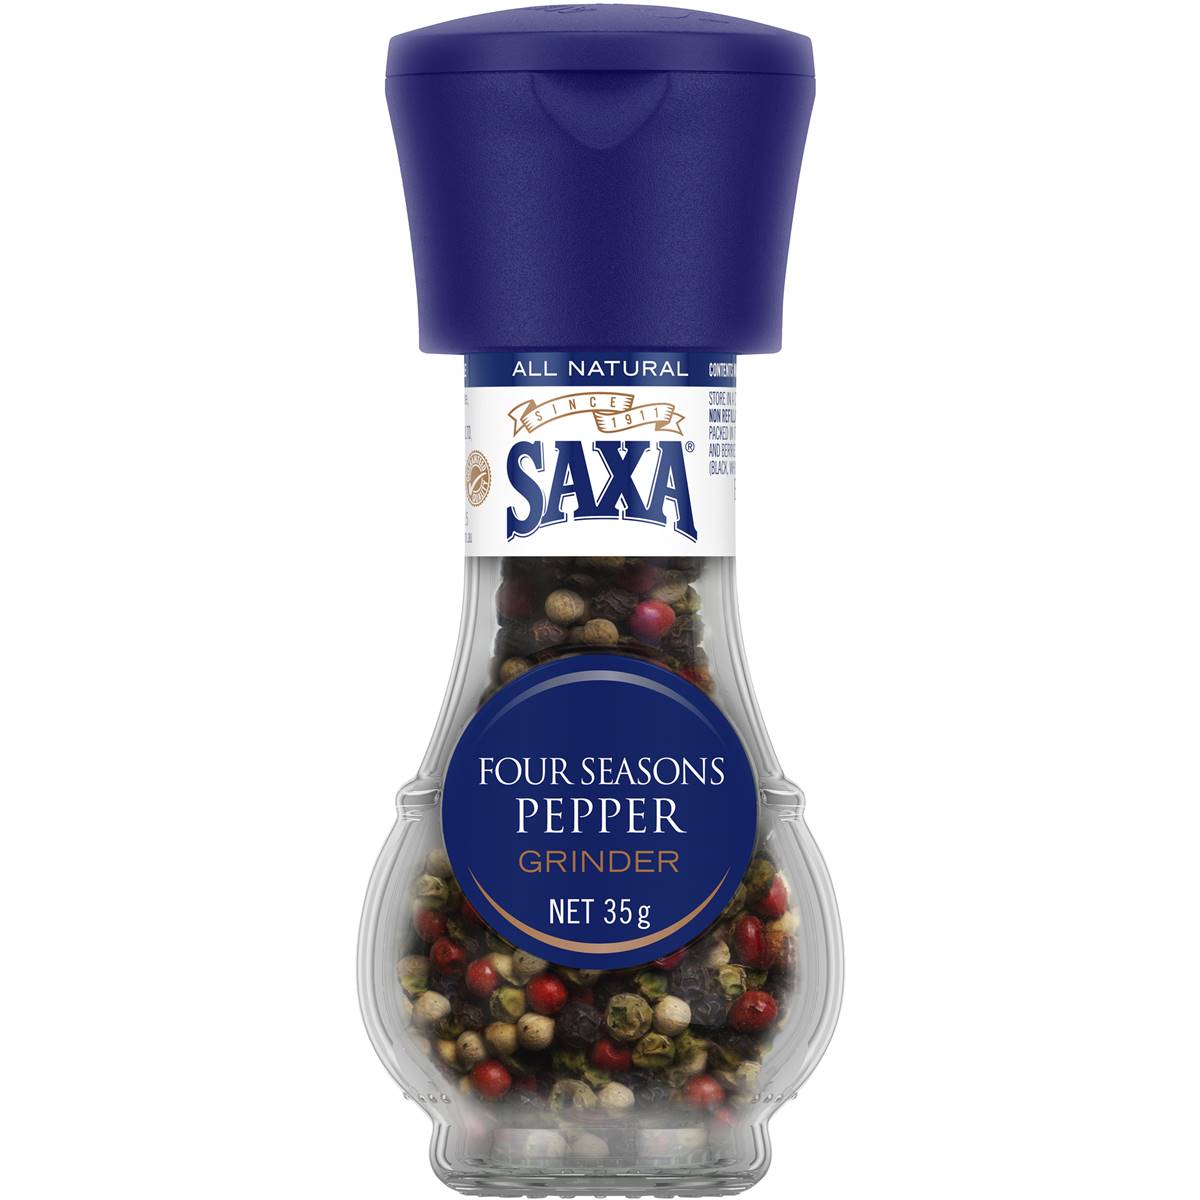 Saxa Pepper Grinder Four Seasons